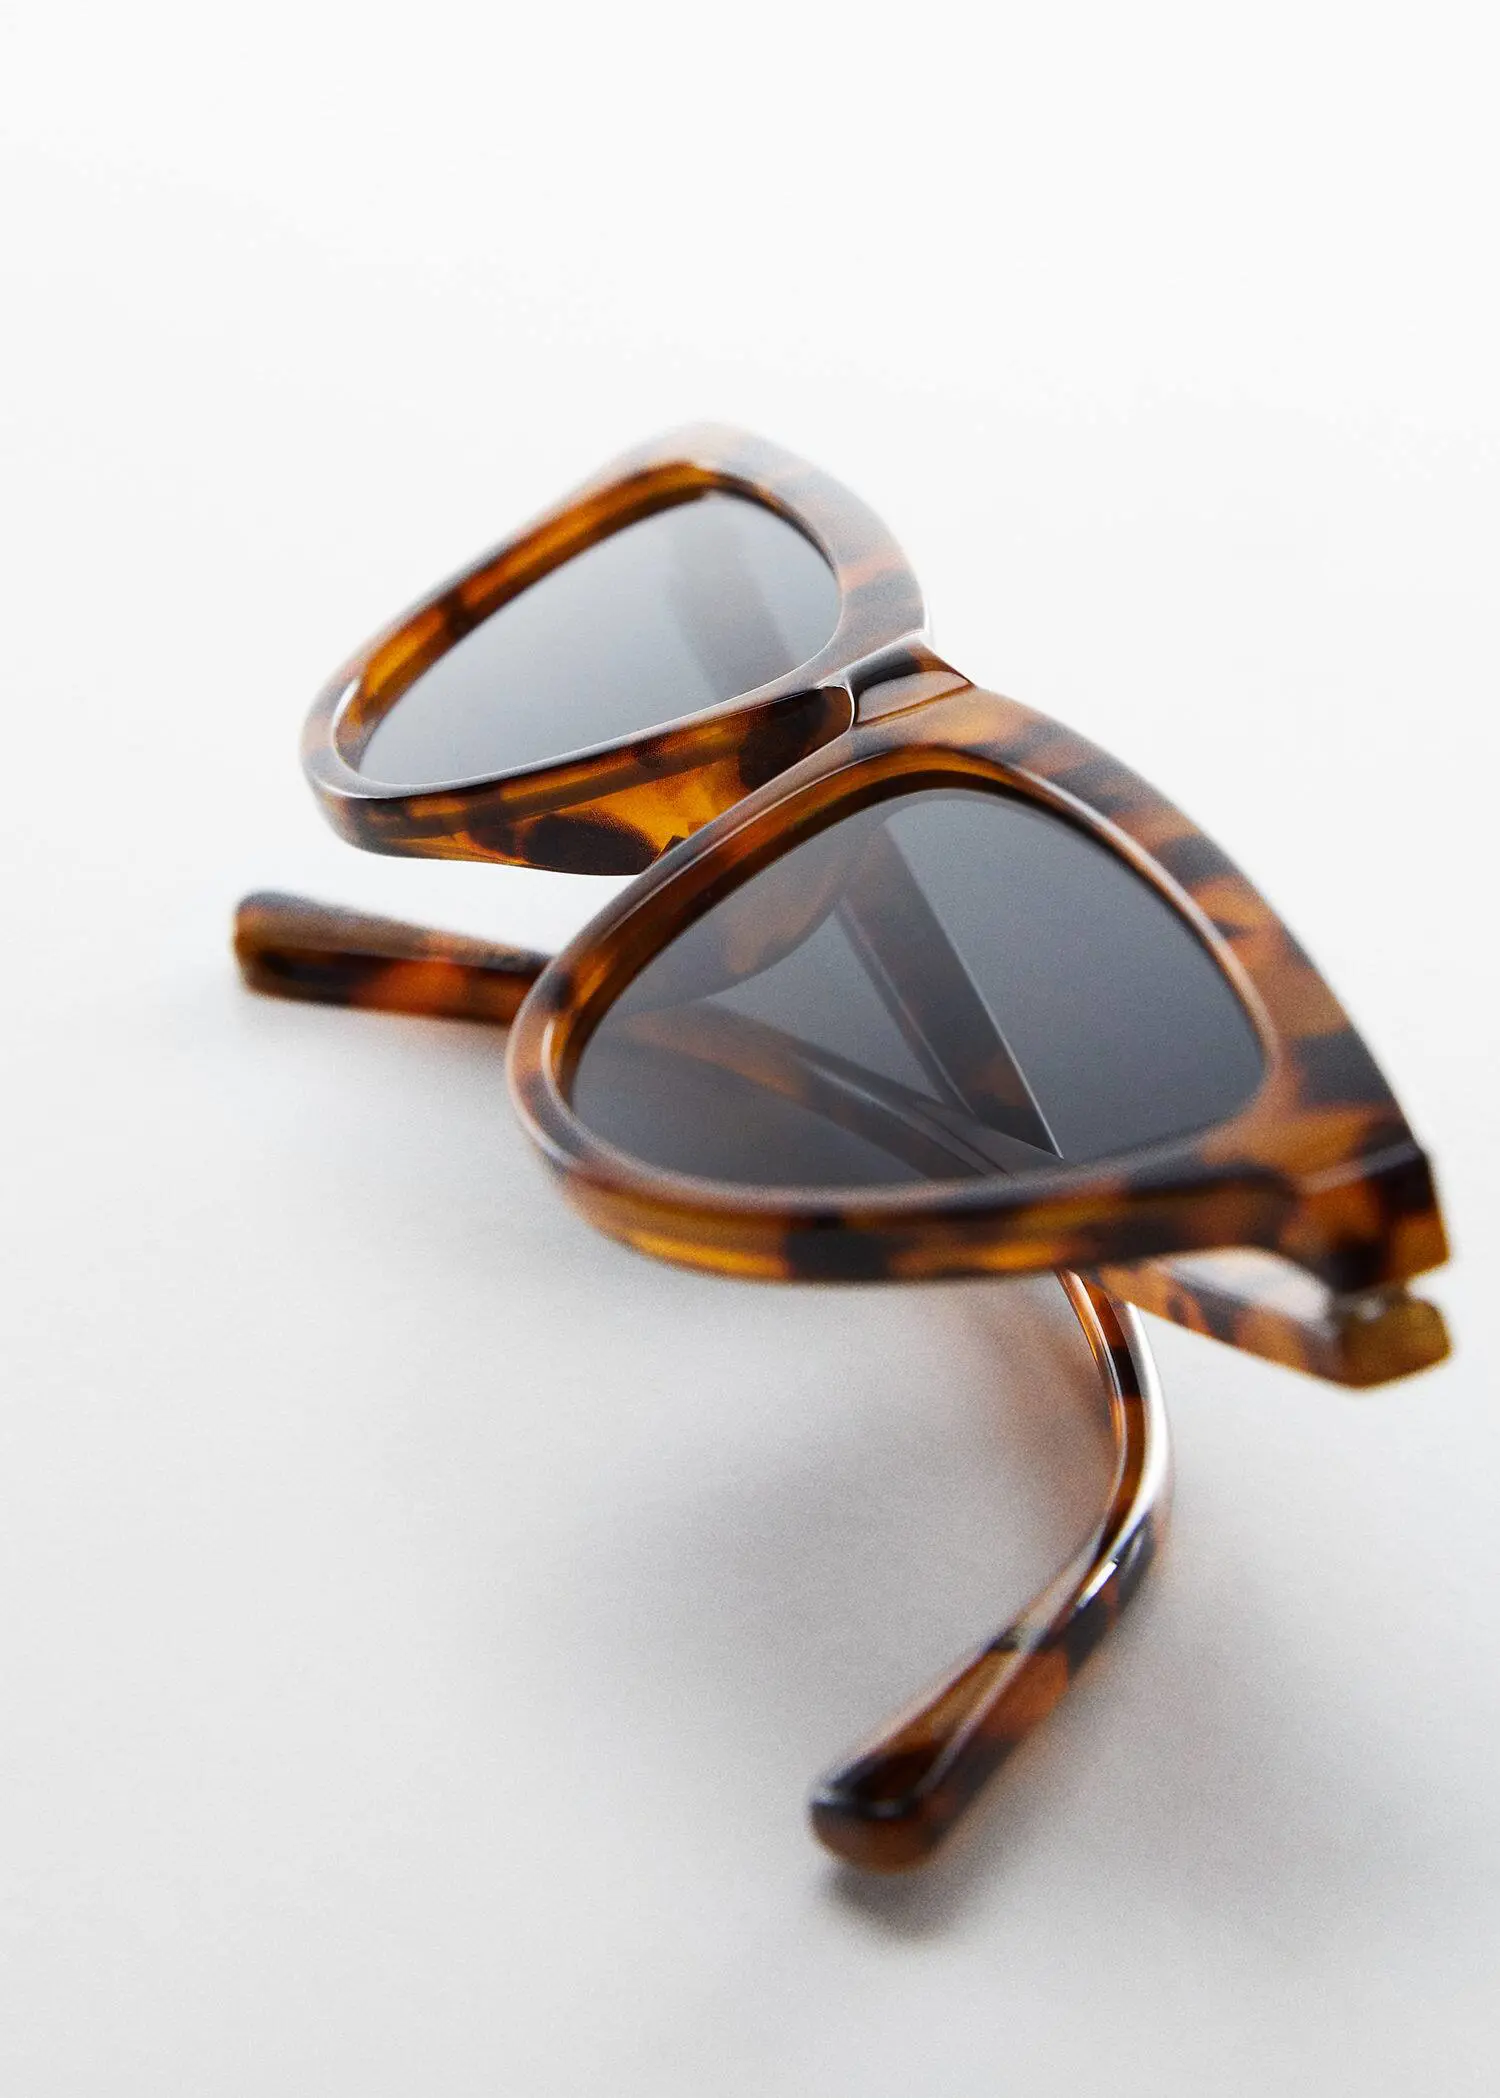 Mango Retro style sunglasses. a close up of a pair of sunglasses. 